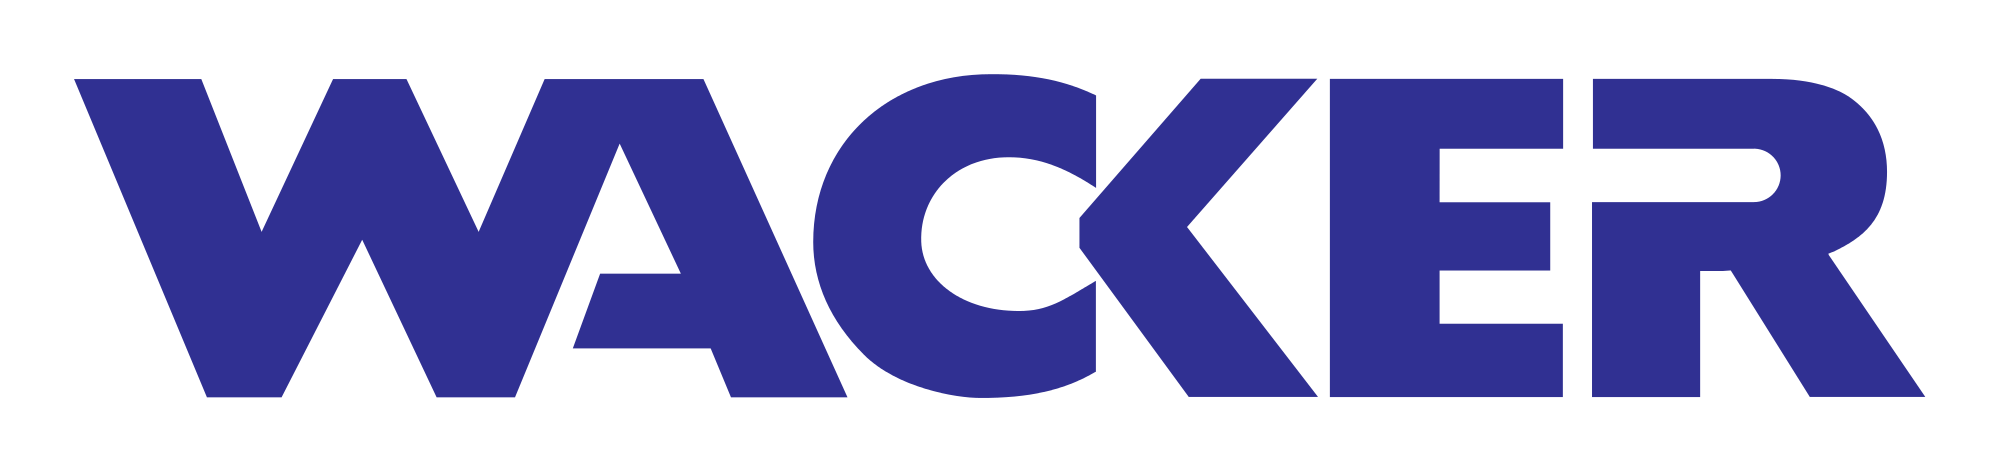 Wacker Logo - LogoDix